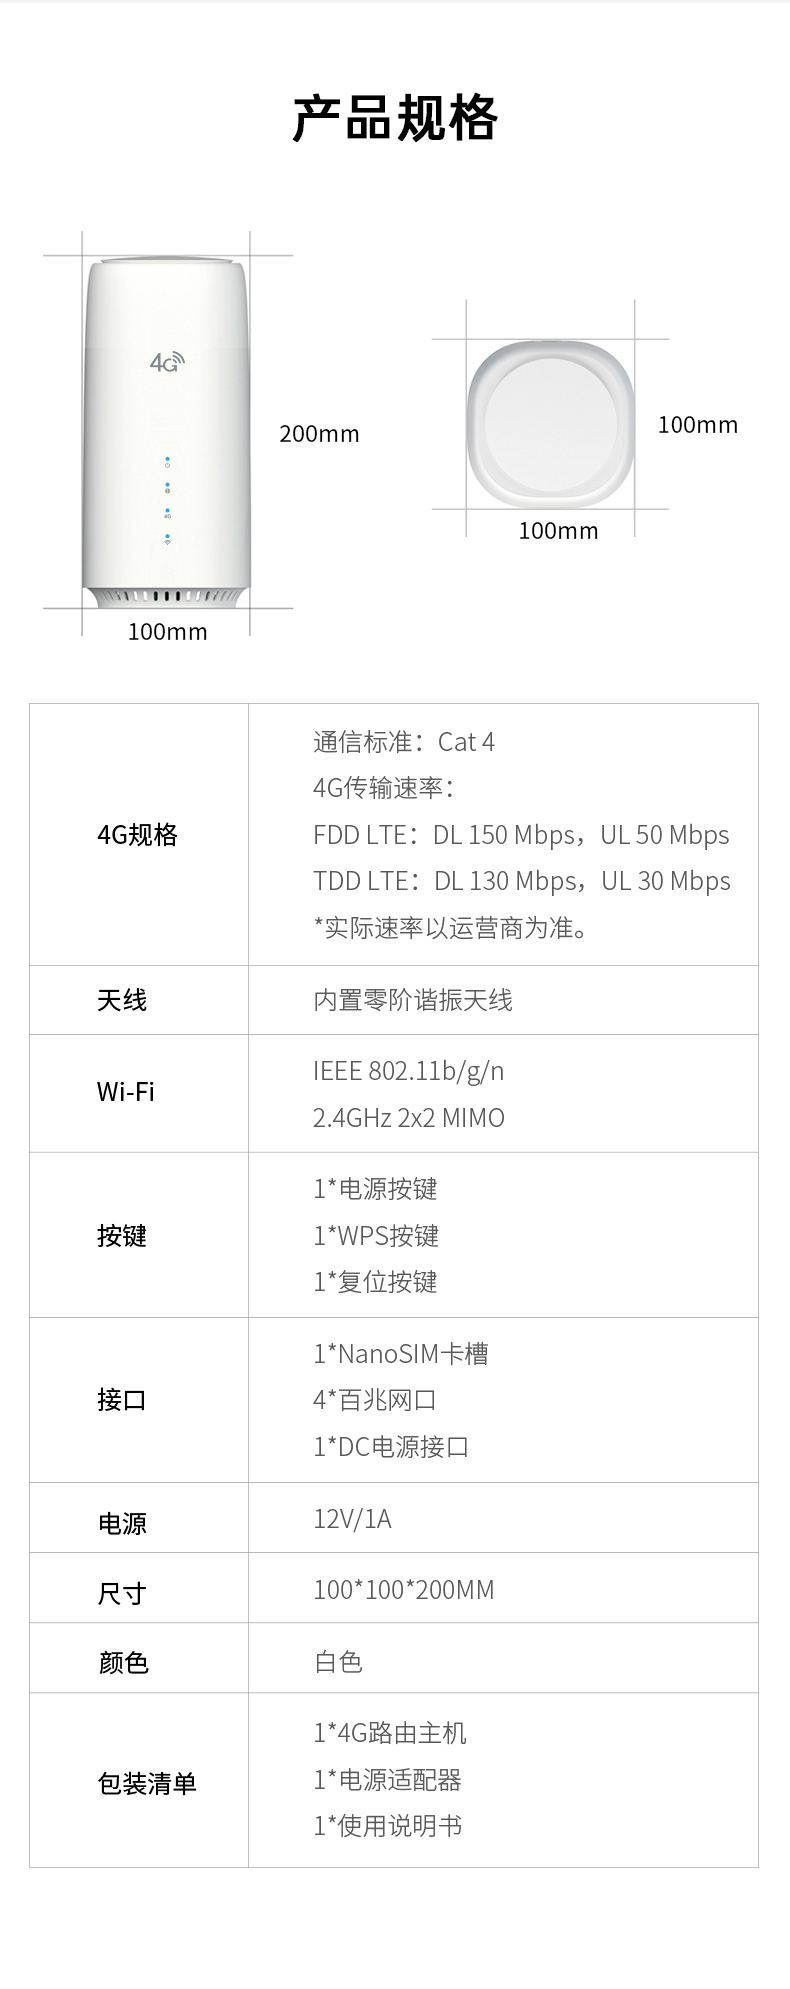 4G无线路由器随身WiFi移动无线宽带立式CPE内置纯流量上网卡智能热点全网通办公居家户外直播网络